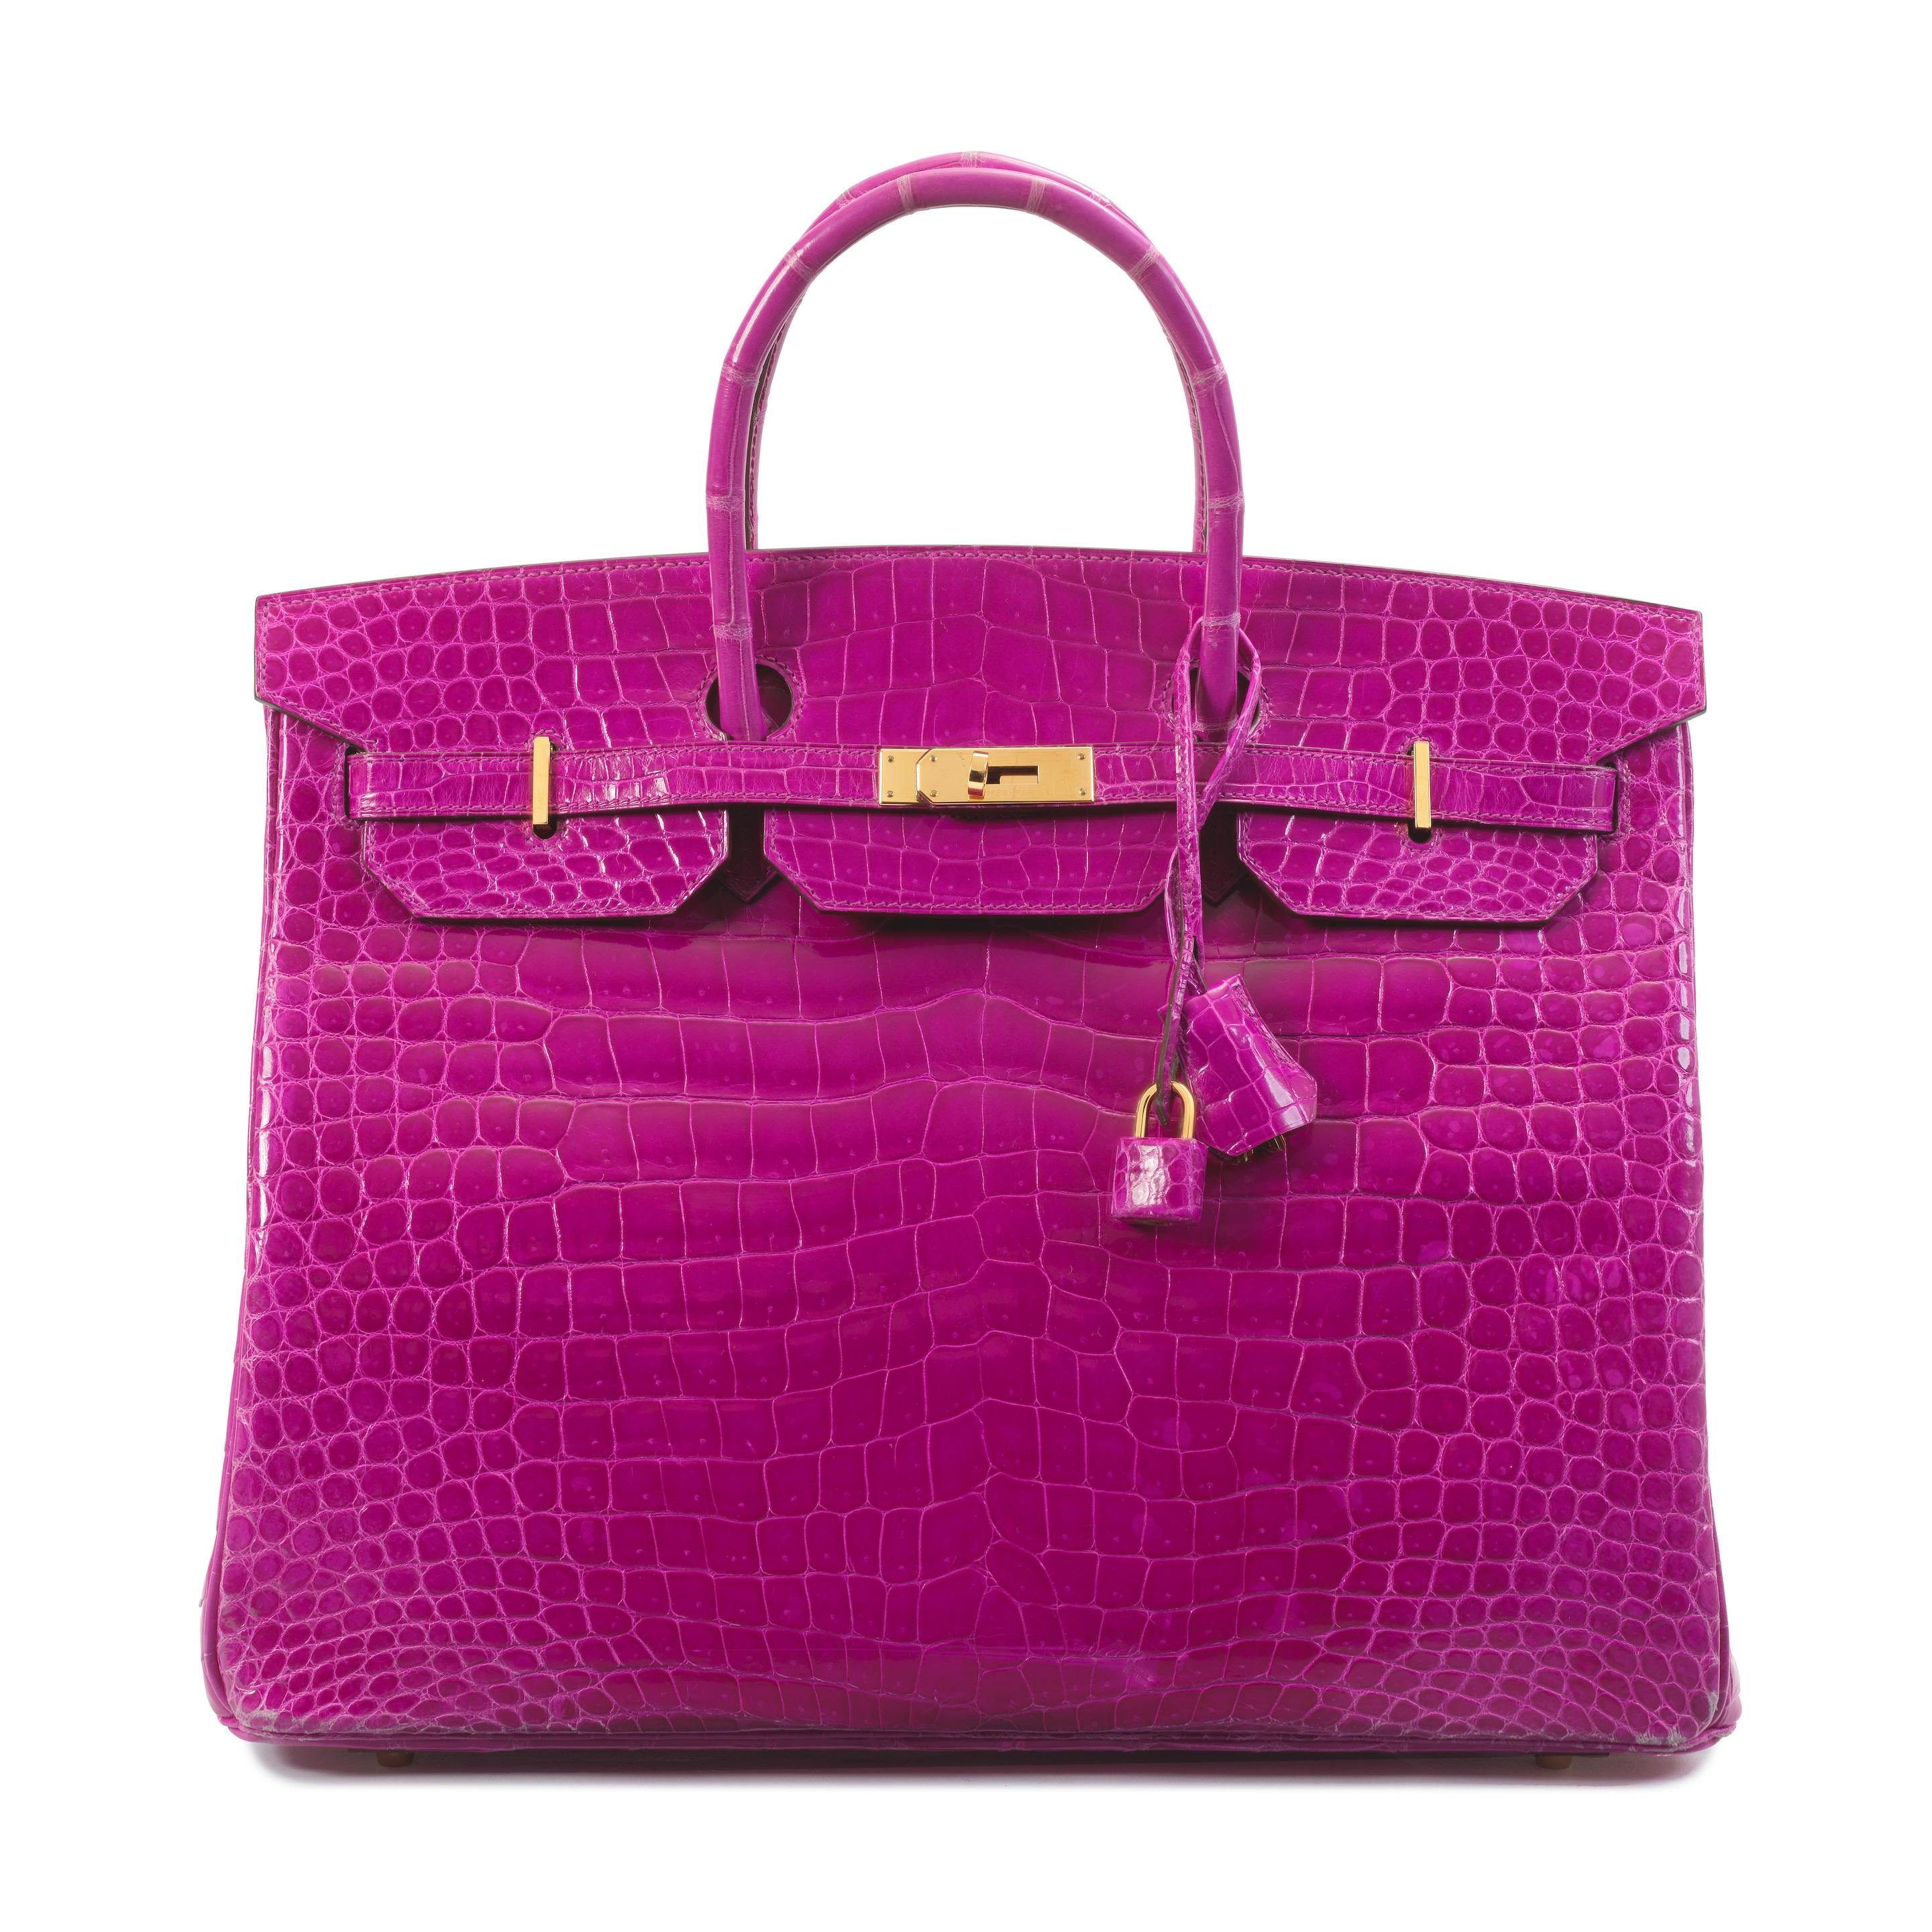 Hermès: A Shiny Rose Scheherazade Porosus Crocodile Birkin 40 2015  (includes Padlock, Keys